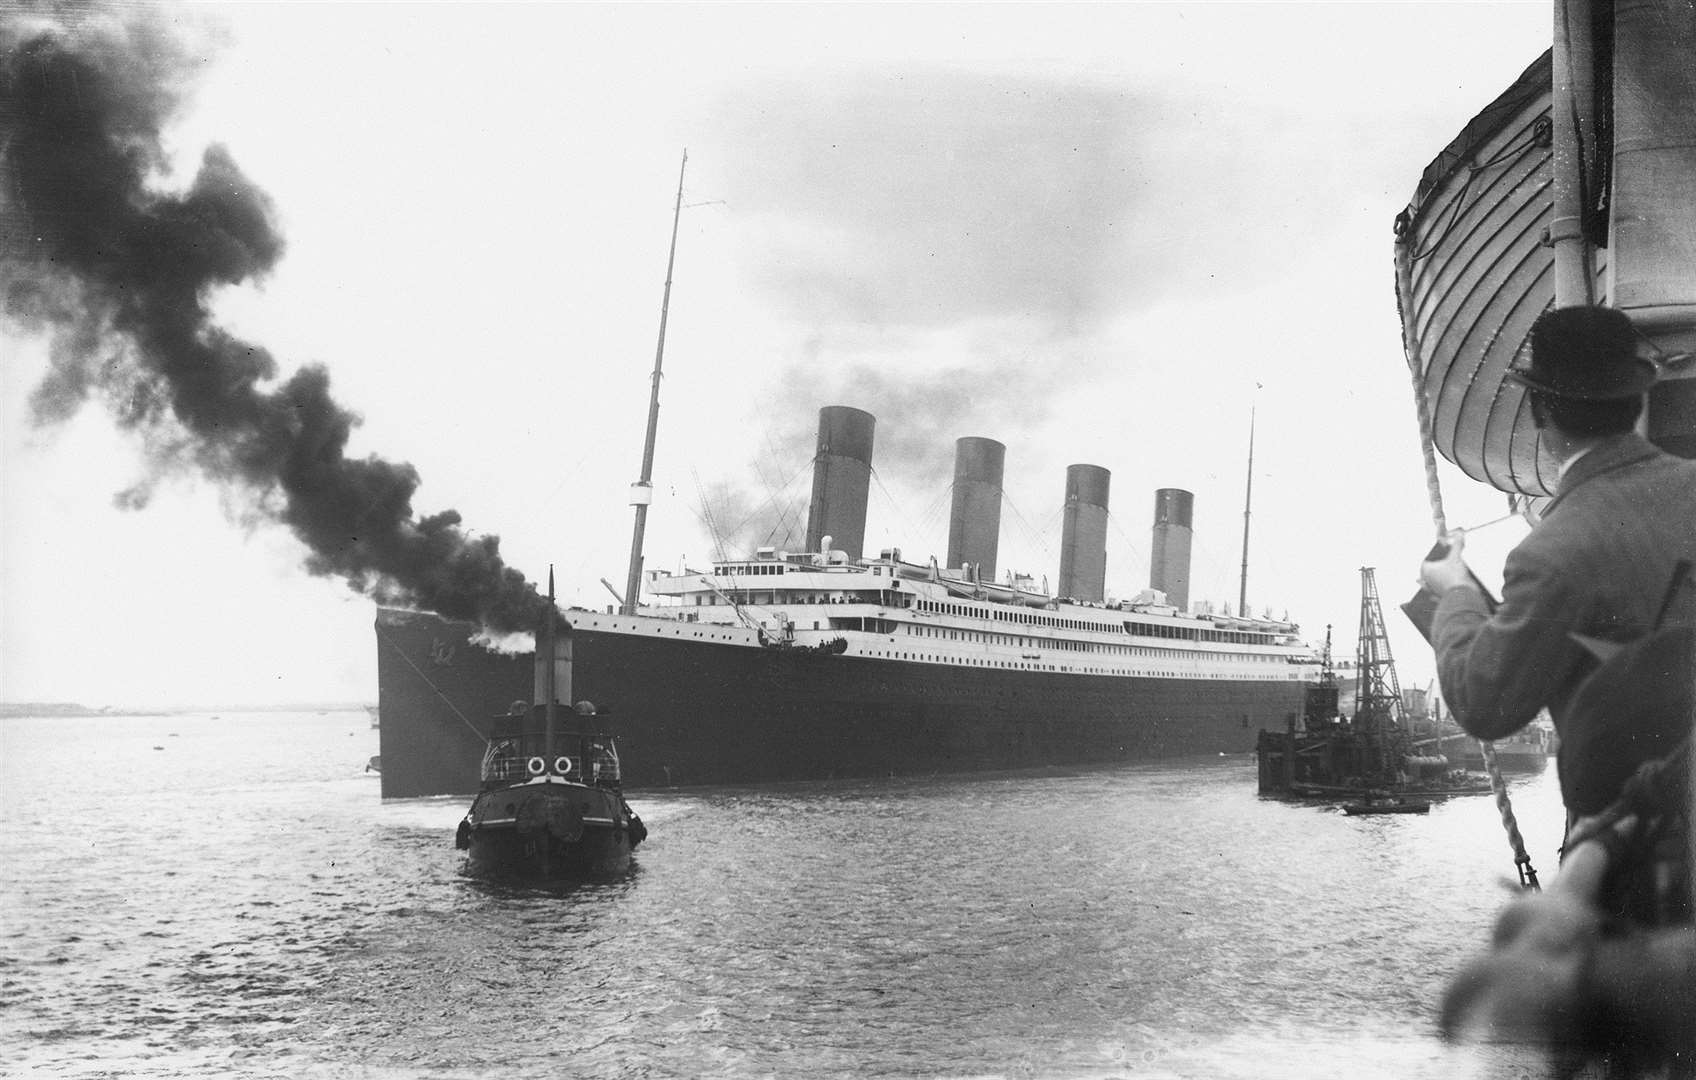 The Titanic sank on April 15, 1912